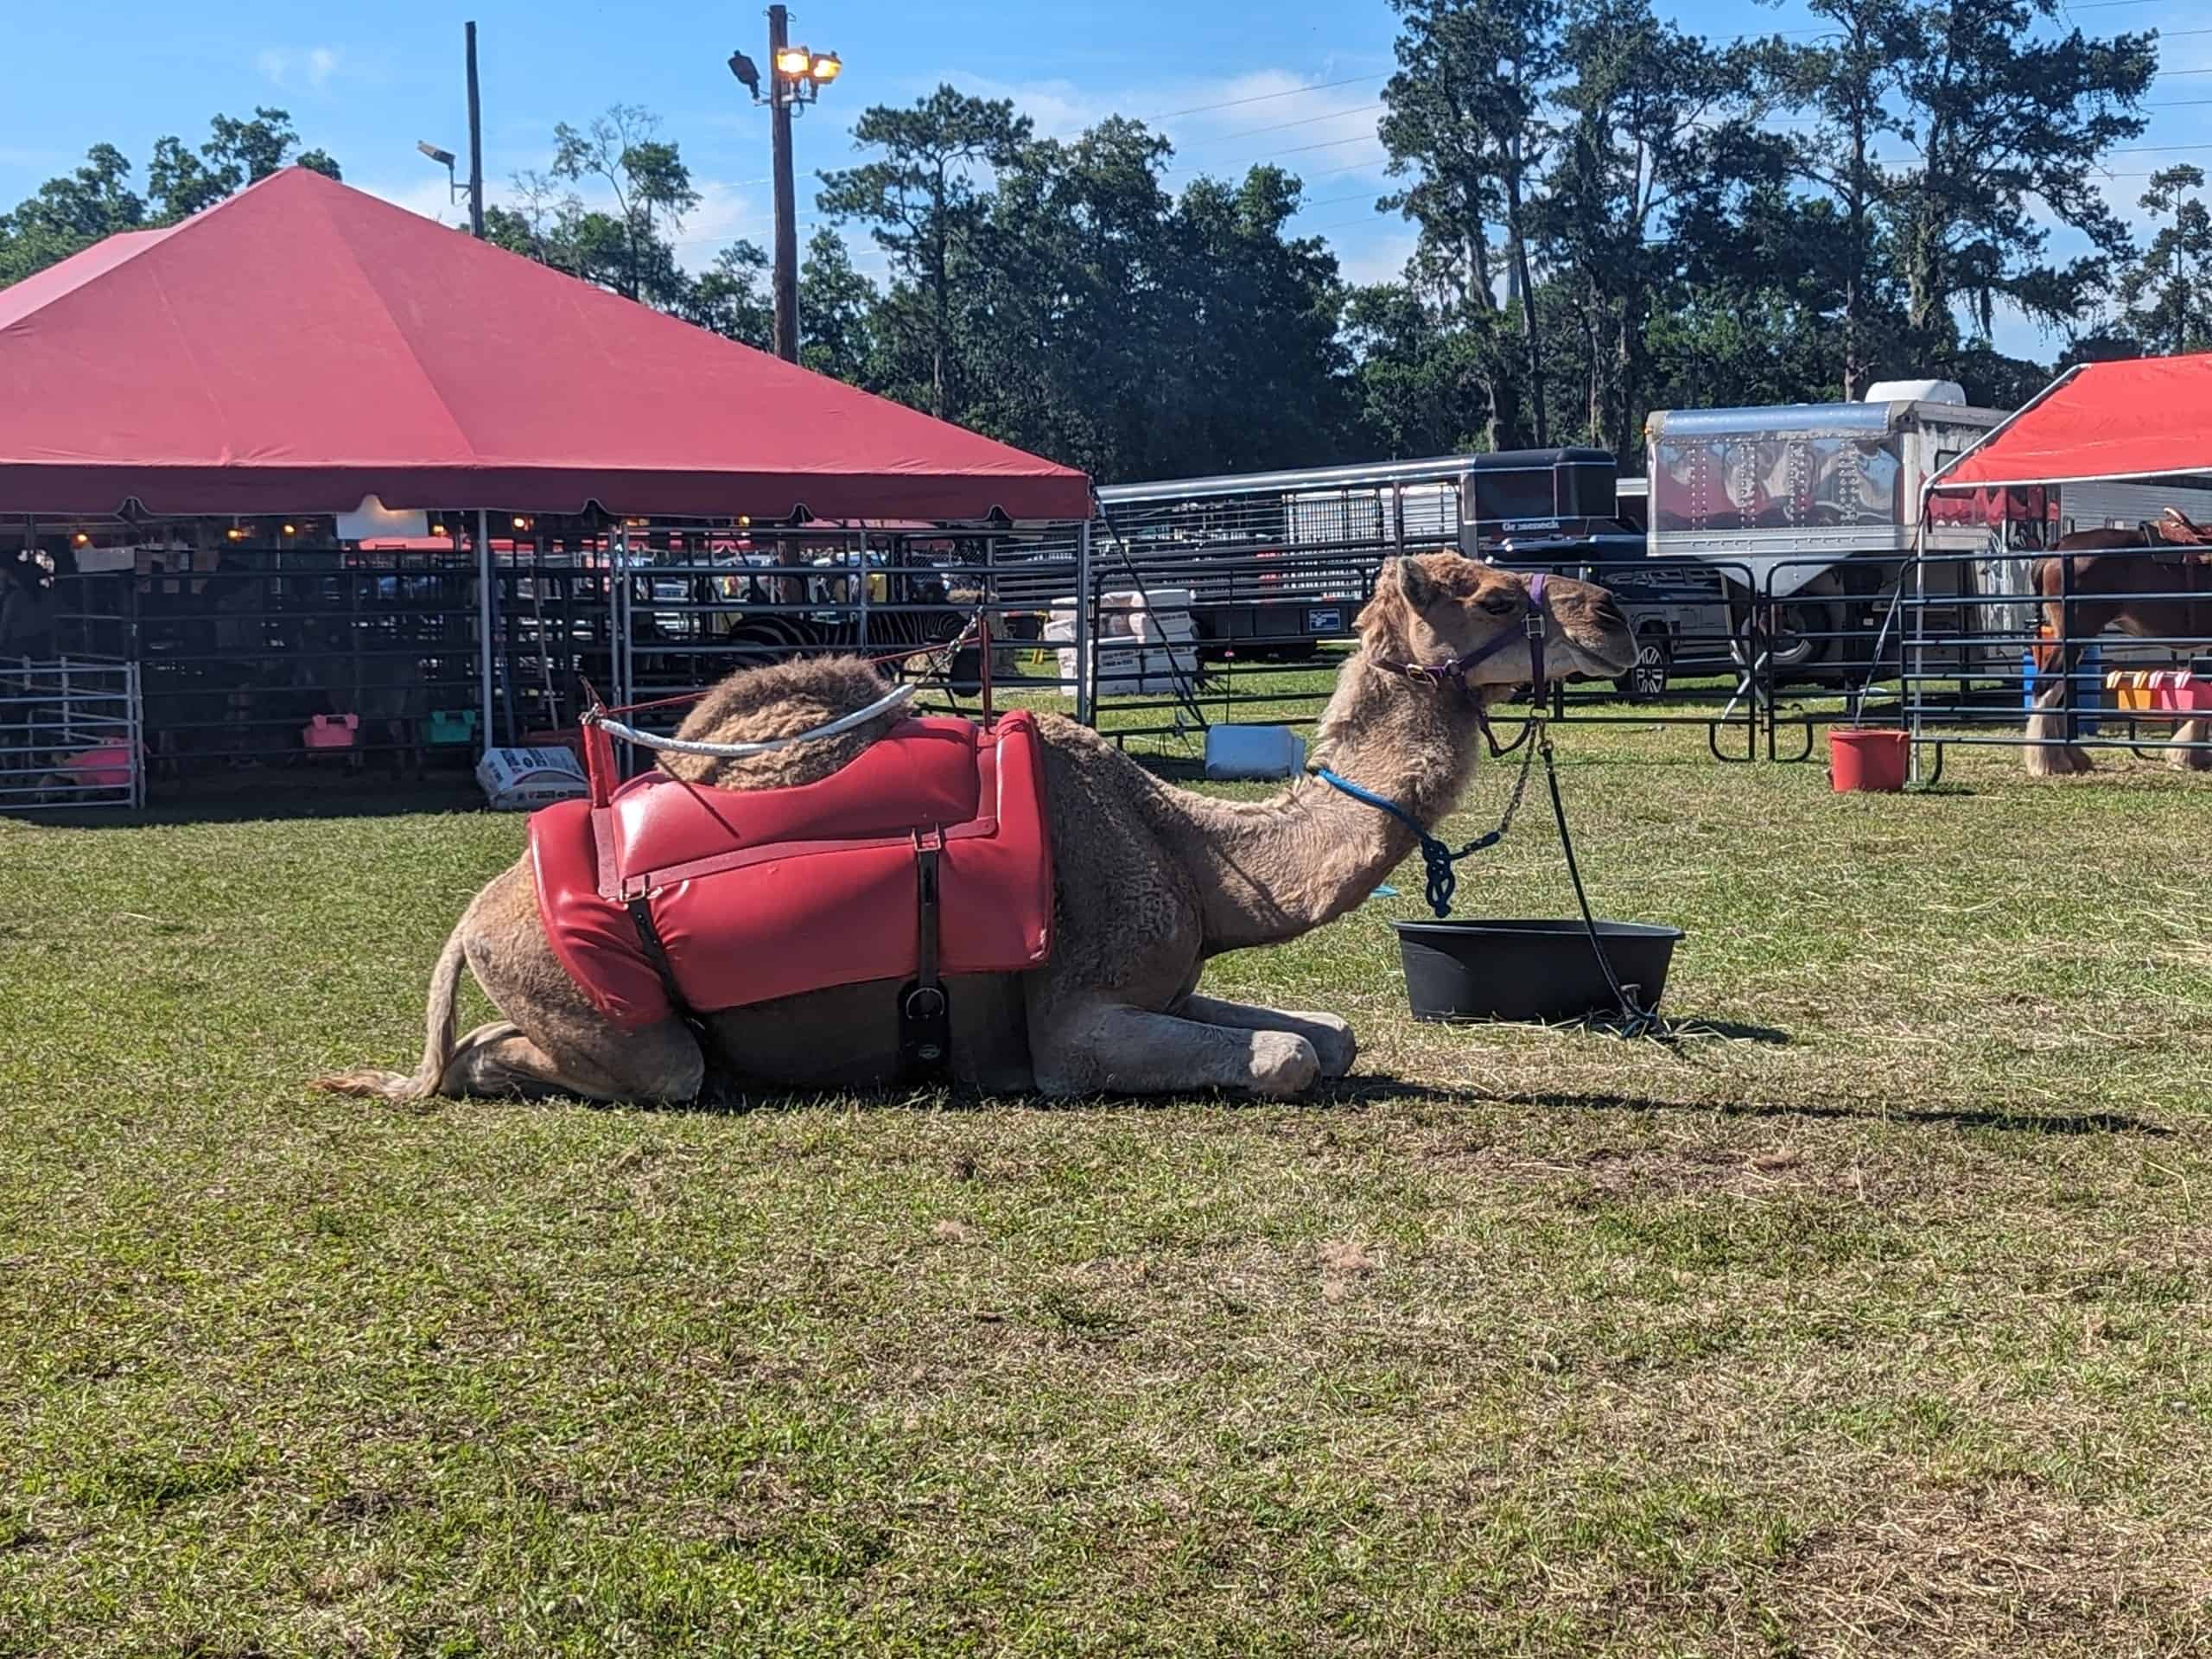 Clyde the Camel at the Hernando County Fair